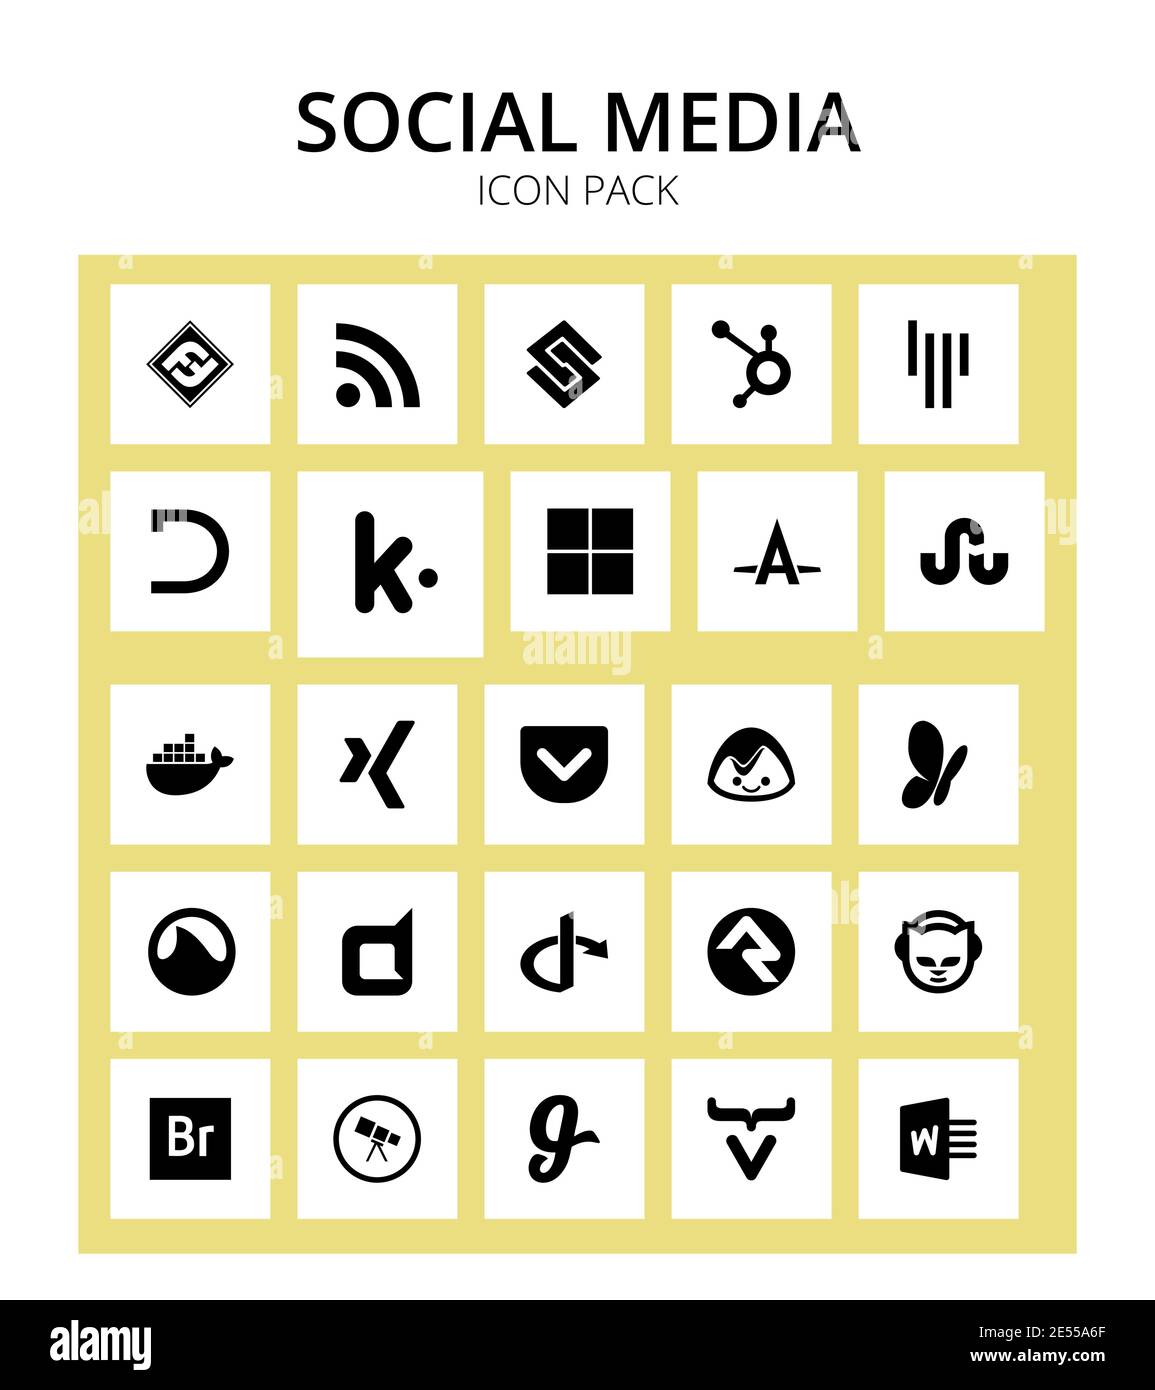 Social Media 25 icons grooveshark, basecamp, kik, pocket, docker Editable Vector Design Elements Stock Vector